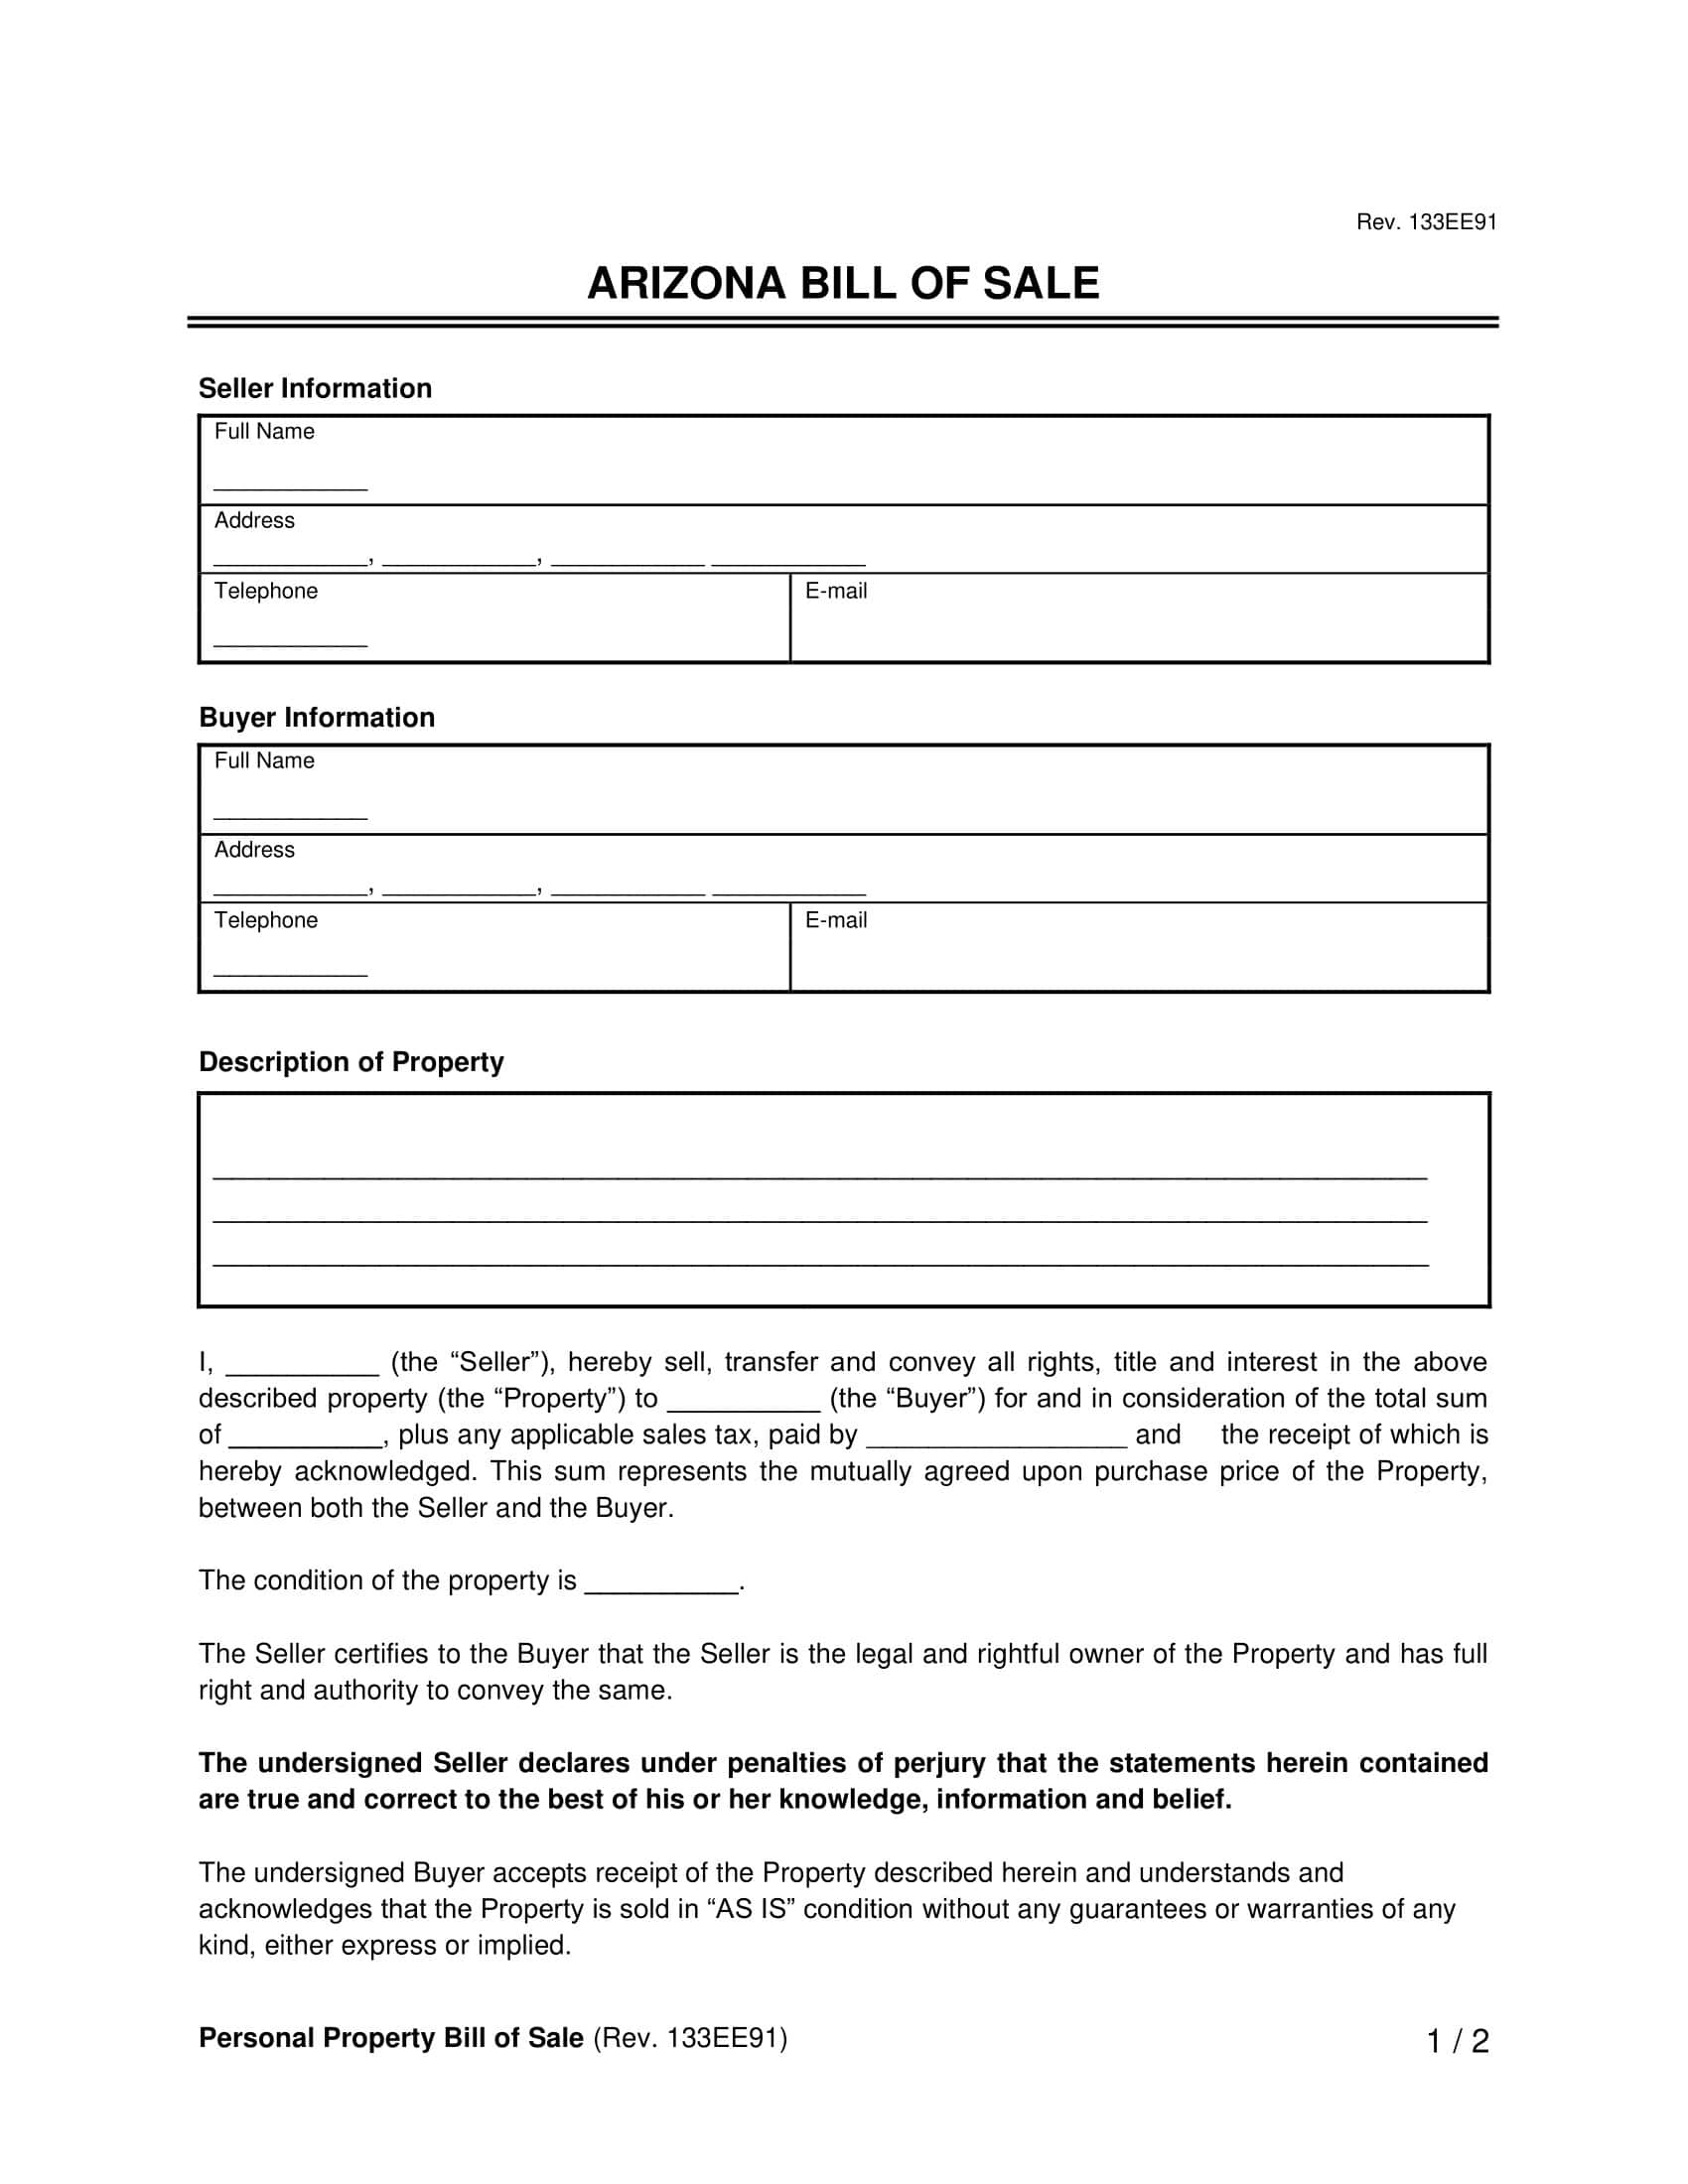 Arizona bill of sale screenshot